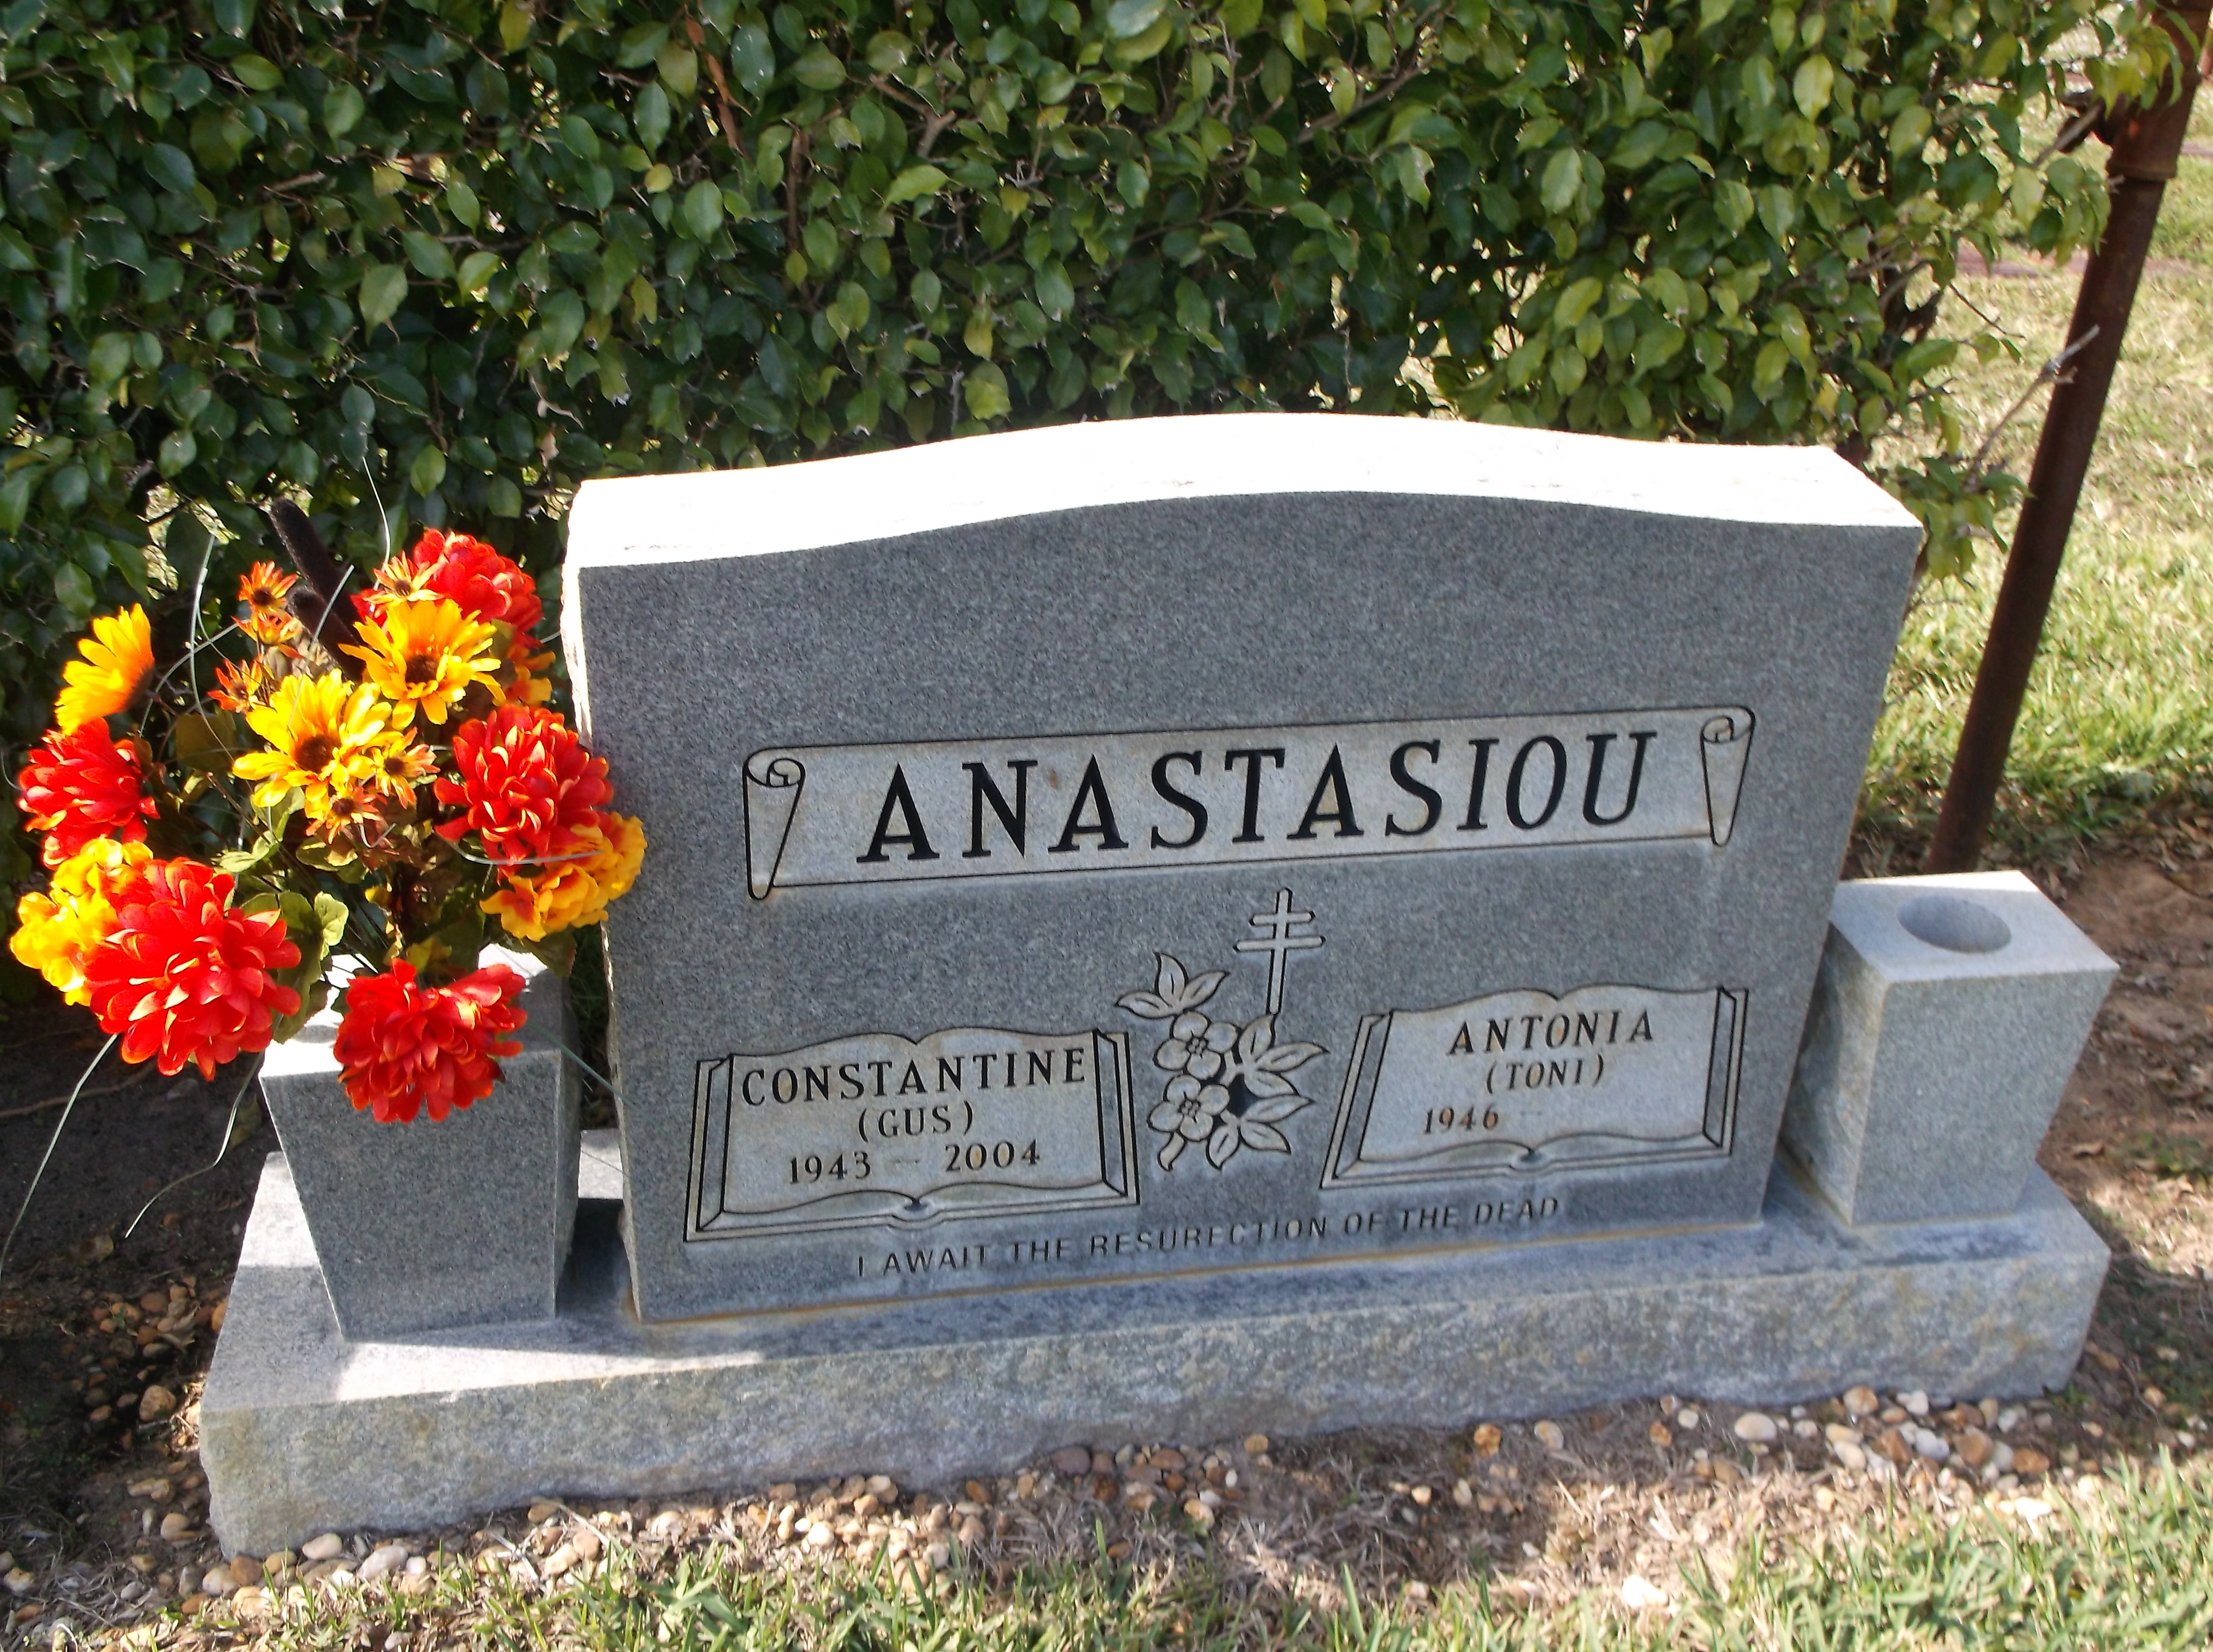 Constantine "Gus" Anastasiou